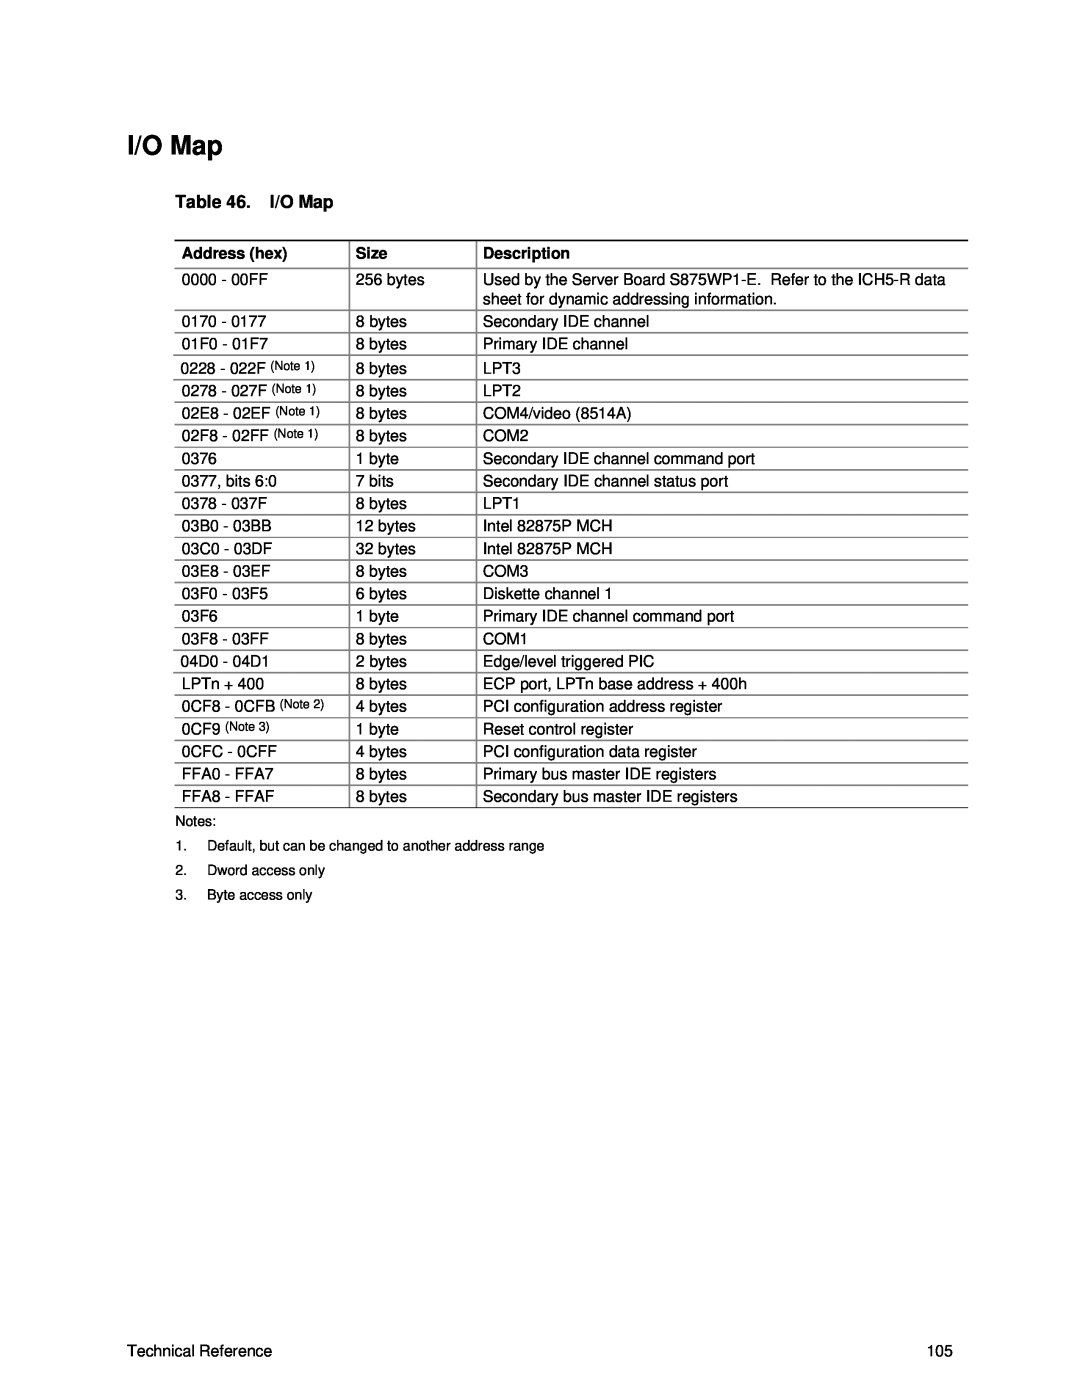 Intel S875WP1-E manual I/O Map 